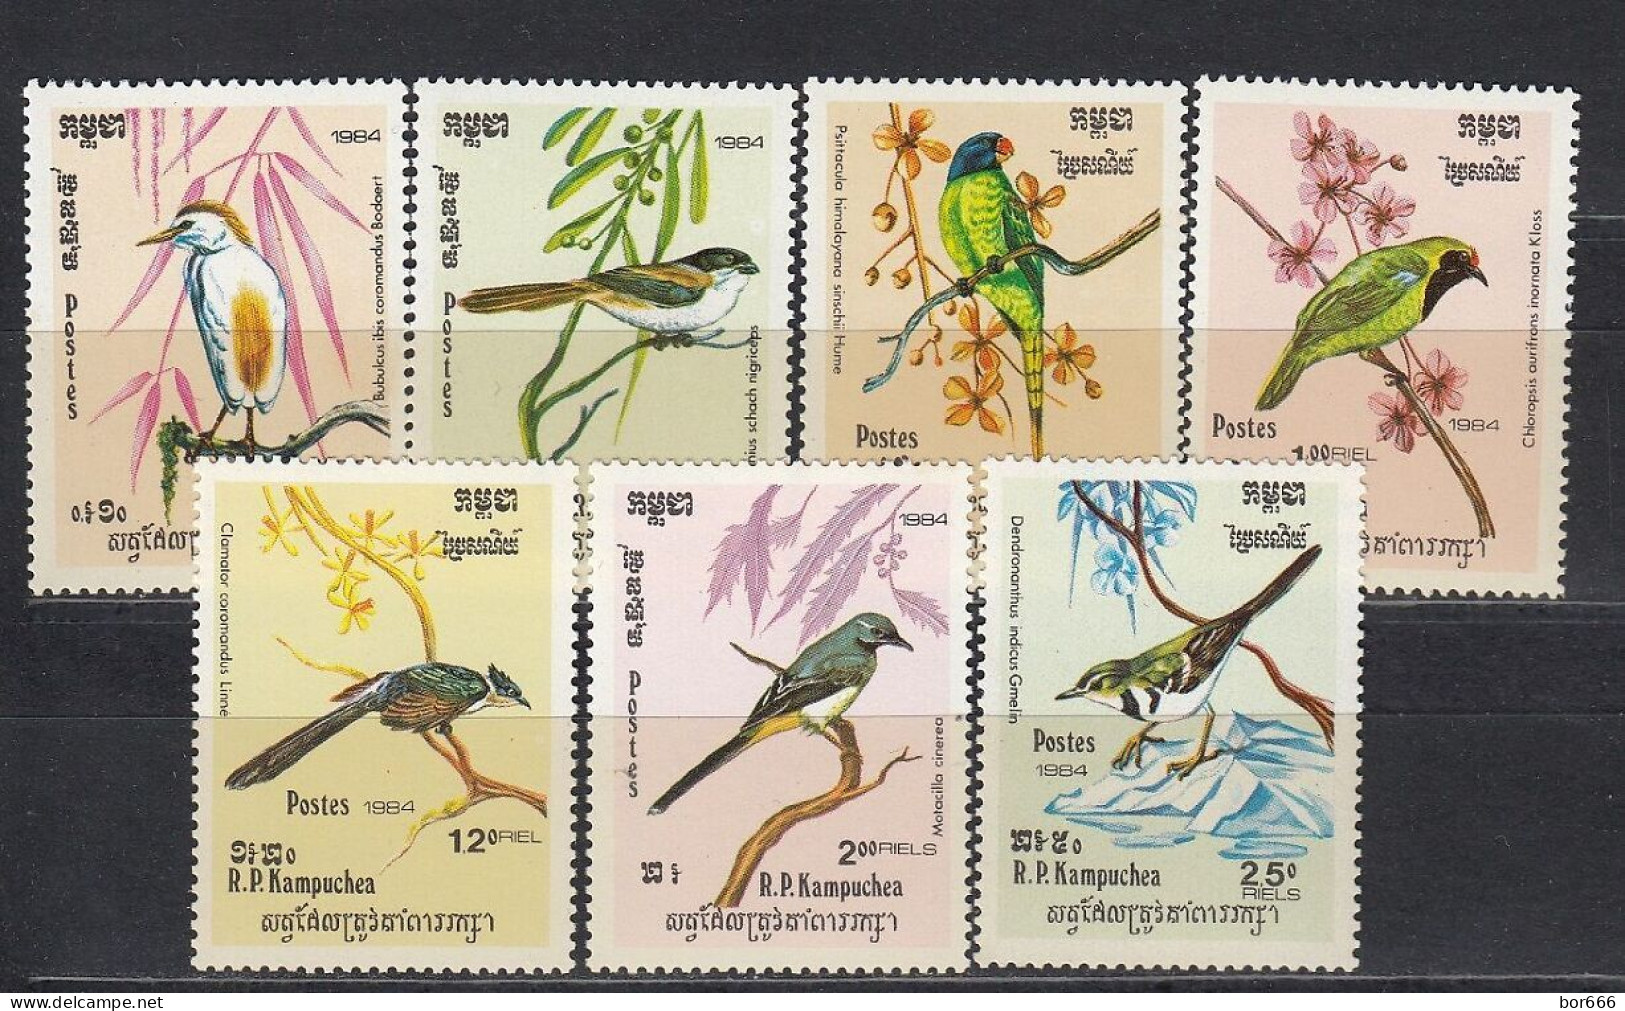 Kampuchea - BIRDS 1984 MNH - Kampuchea